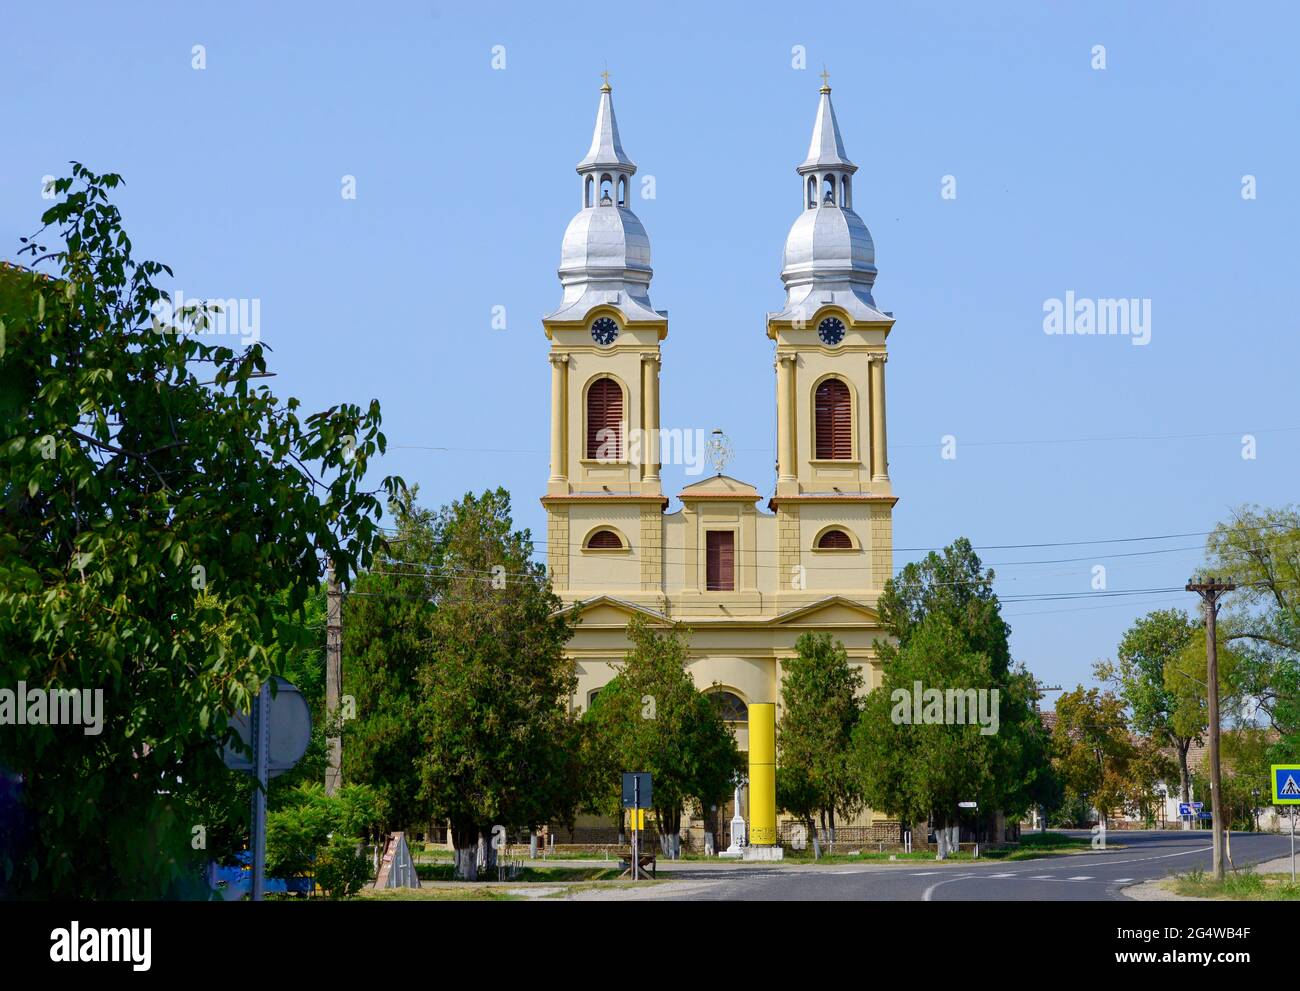 Sandra village catholic church romania landmark architecture Stock Photo